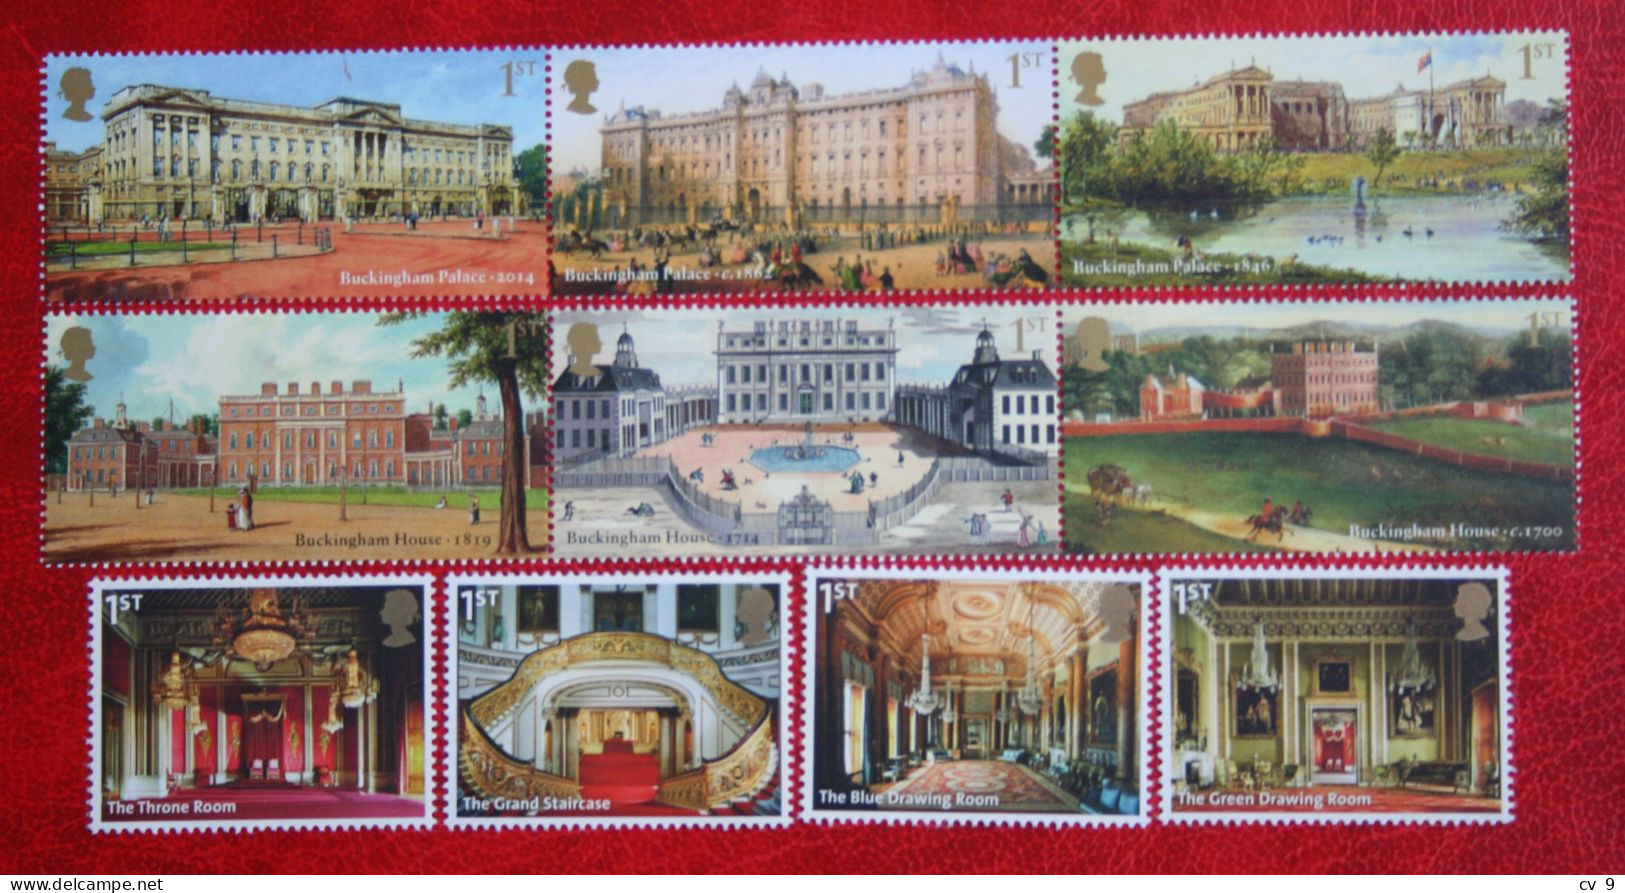 Buckingham Palace (Mi 3588-3597) 2014 POSTFRIS MNH ** ENGLAND GRANDE-BRETAGNE GB GREAT BRITAIN - Unused Stamps